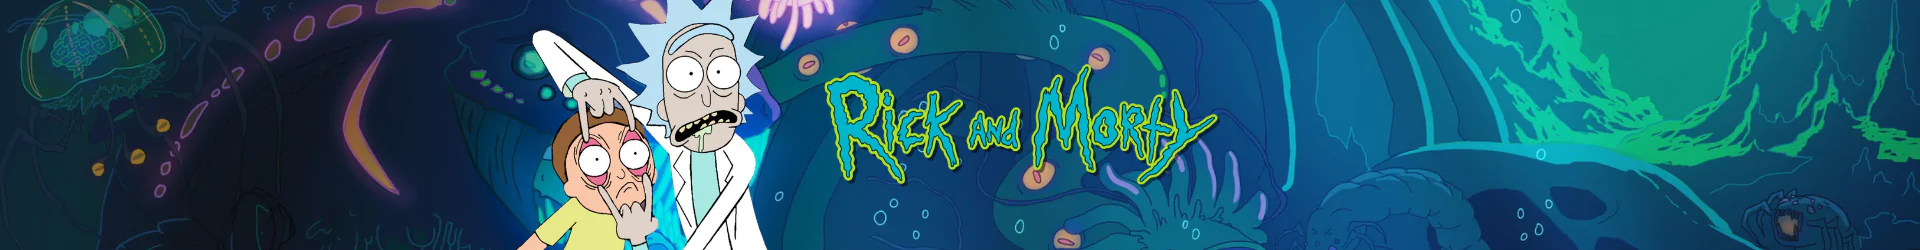 Rick and Morty dekorationen banner